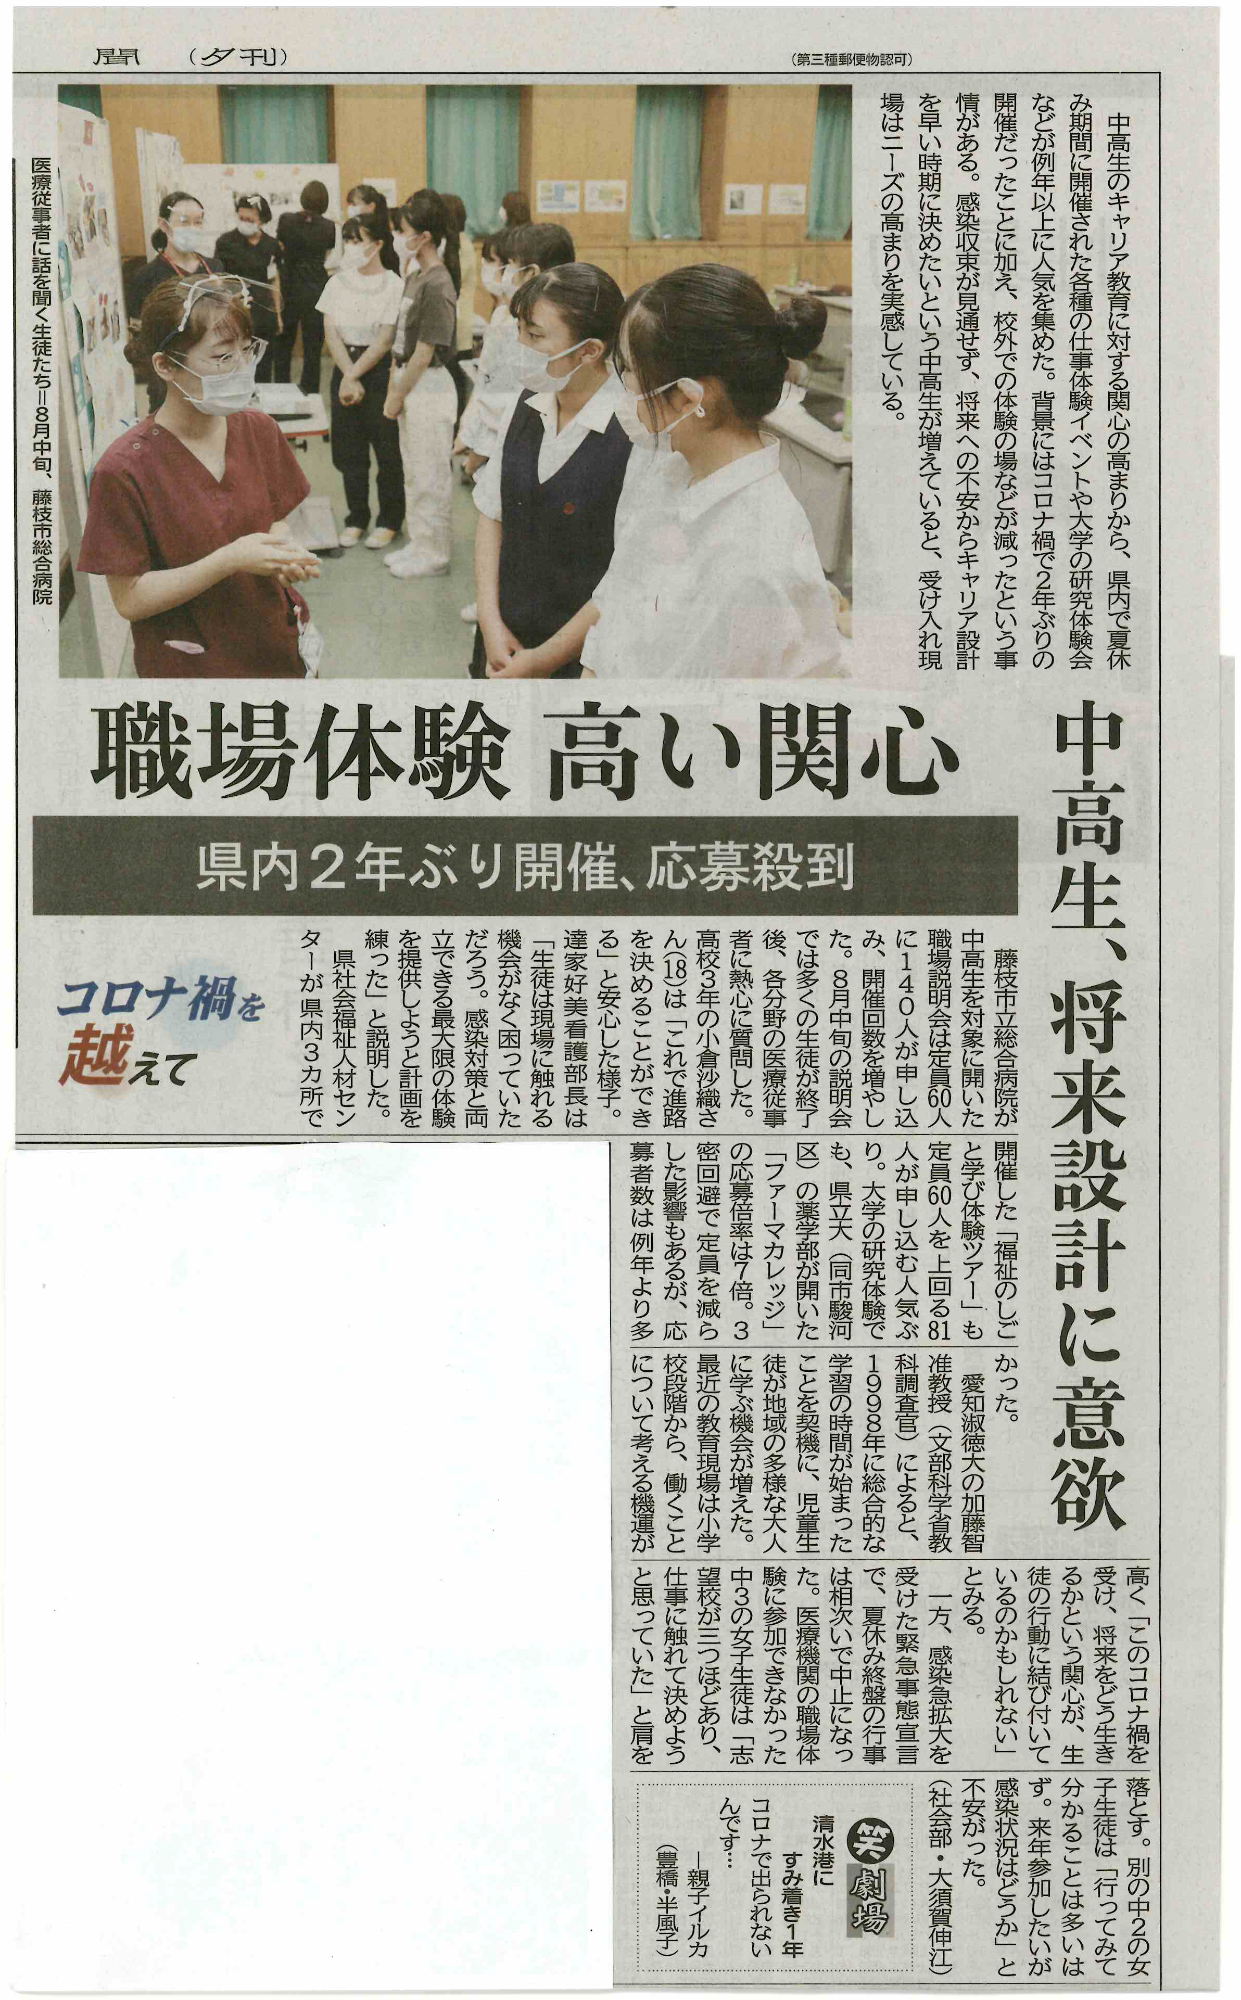 令和3年9月7日静岡新聞掲載記事職場体験 高い関心 県内2年ぶり開催、応募殺到